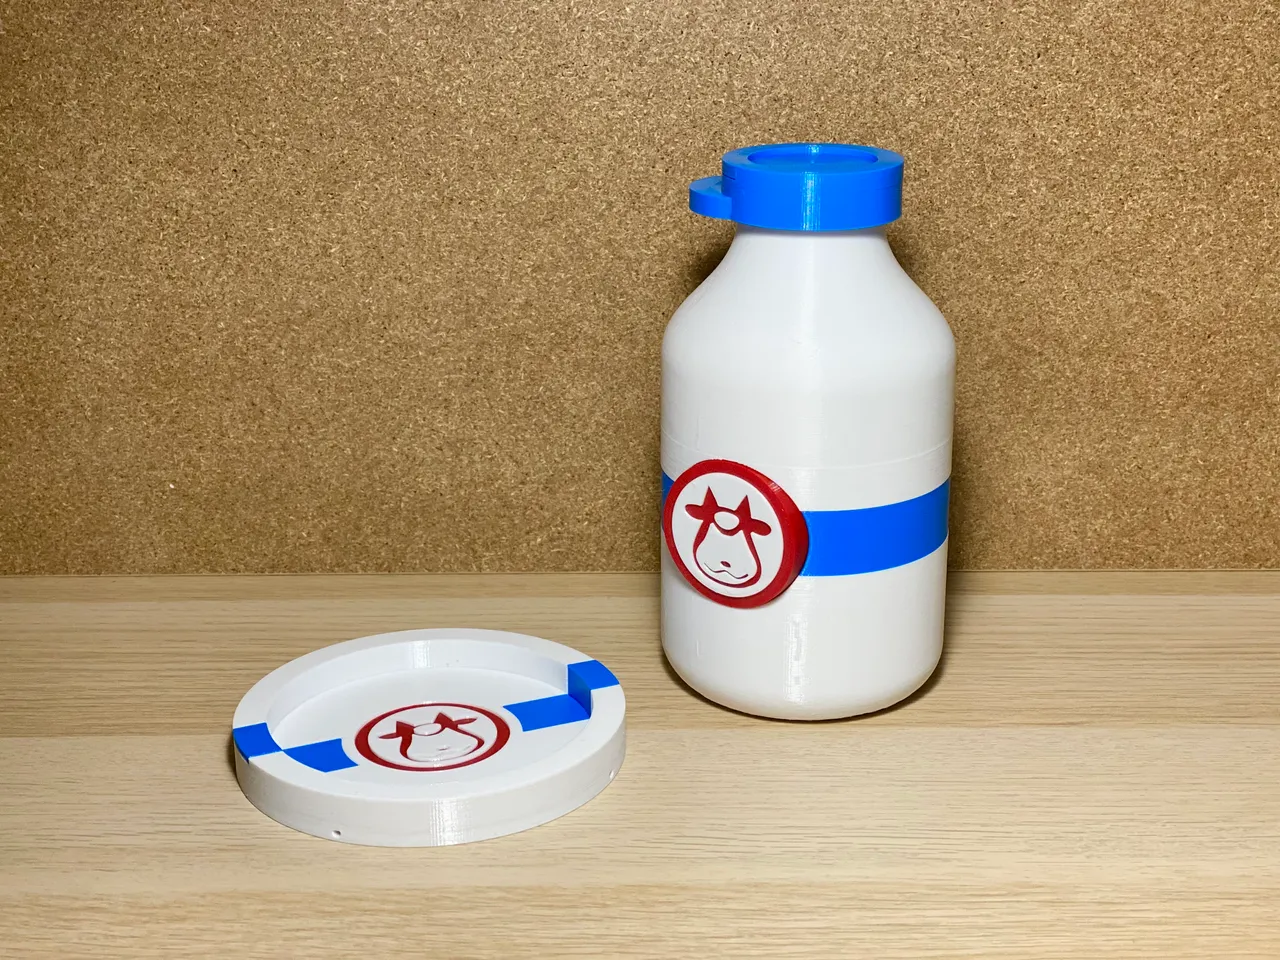 Moomoo Milk Storage Container (Pokemon SV) by Lazlo